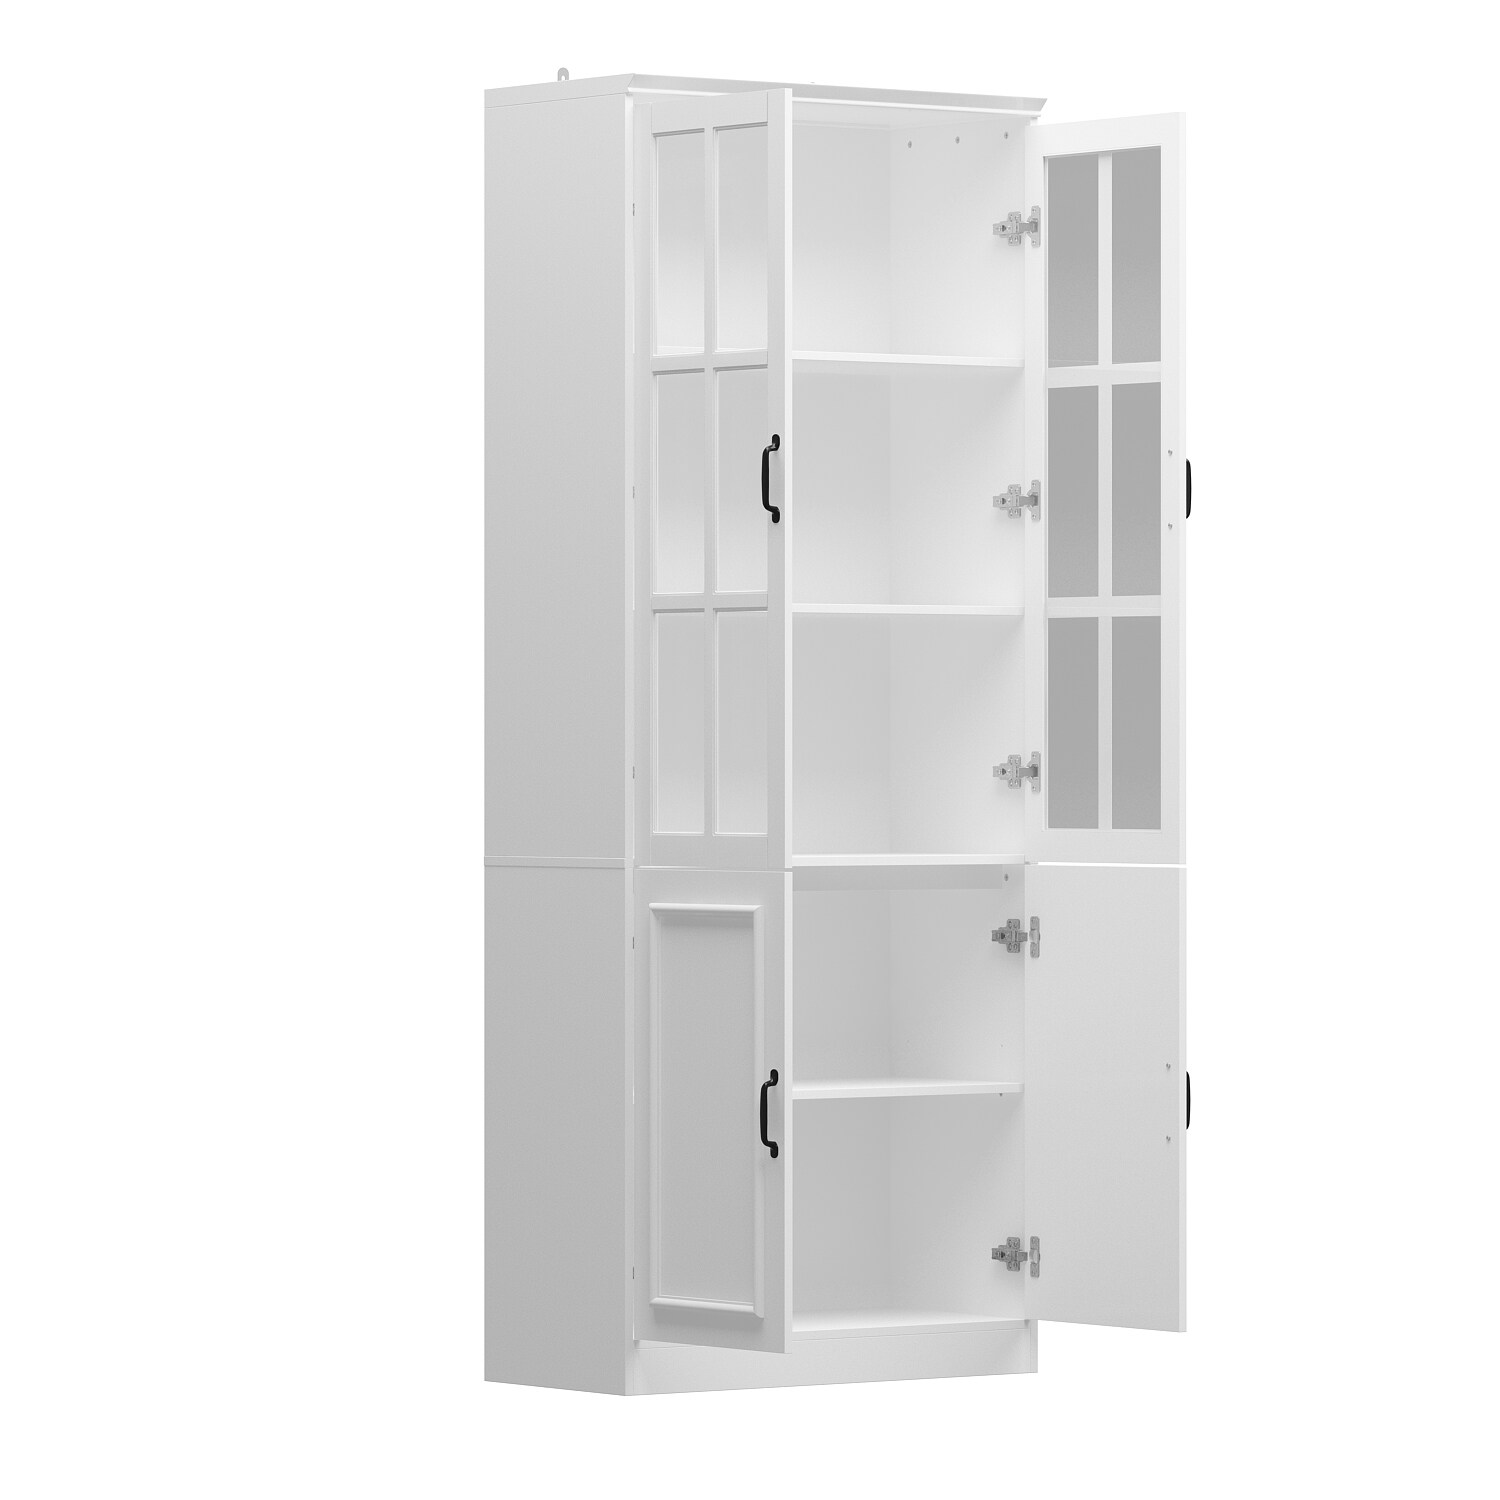 FUFU&GAGA White Mdf 3-Shelf Bookcase with Doors (31.5-in W x 78.7-in H ...